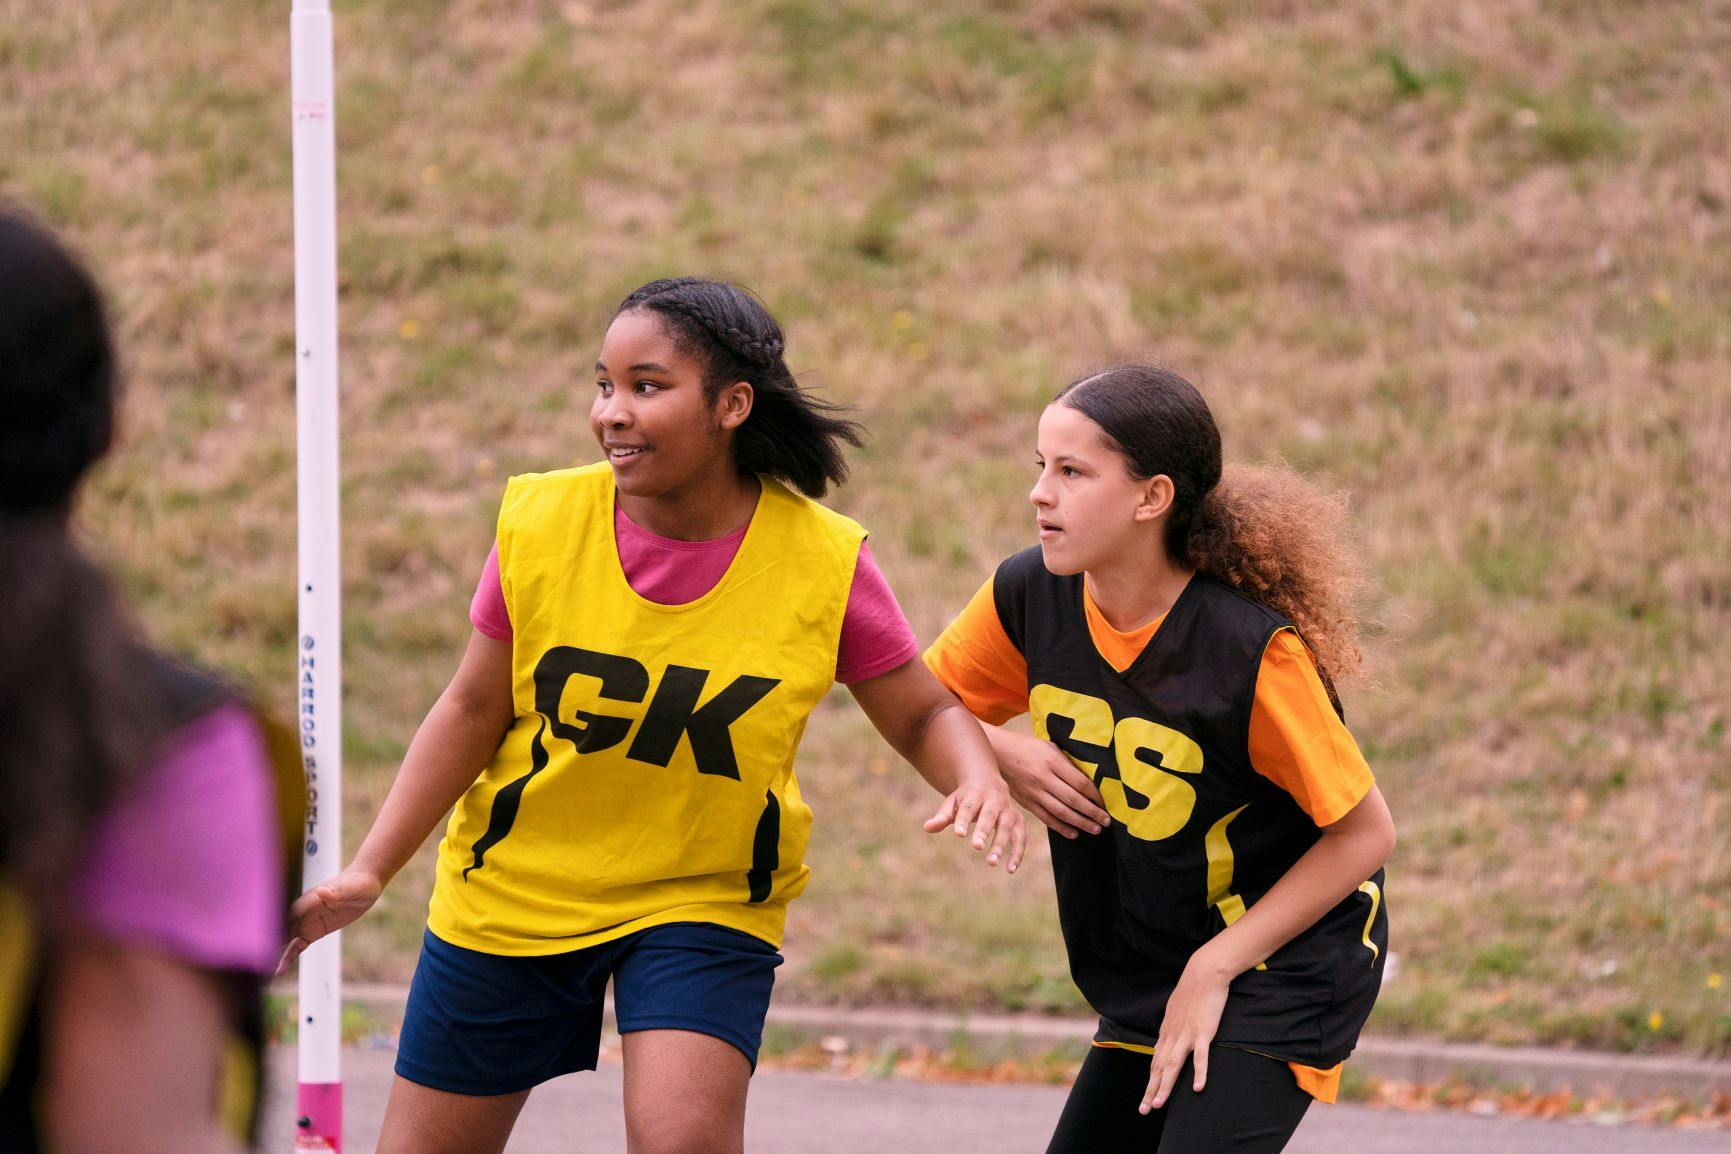 Young women playing netball photograph